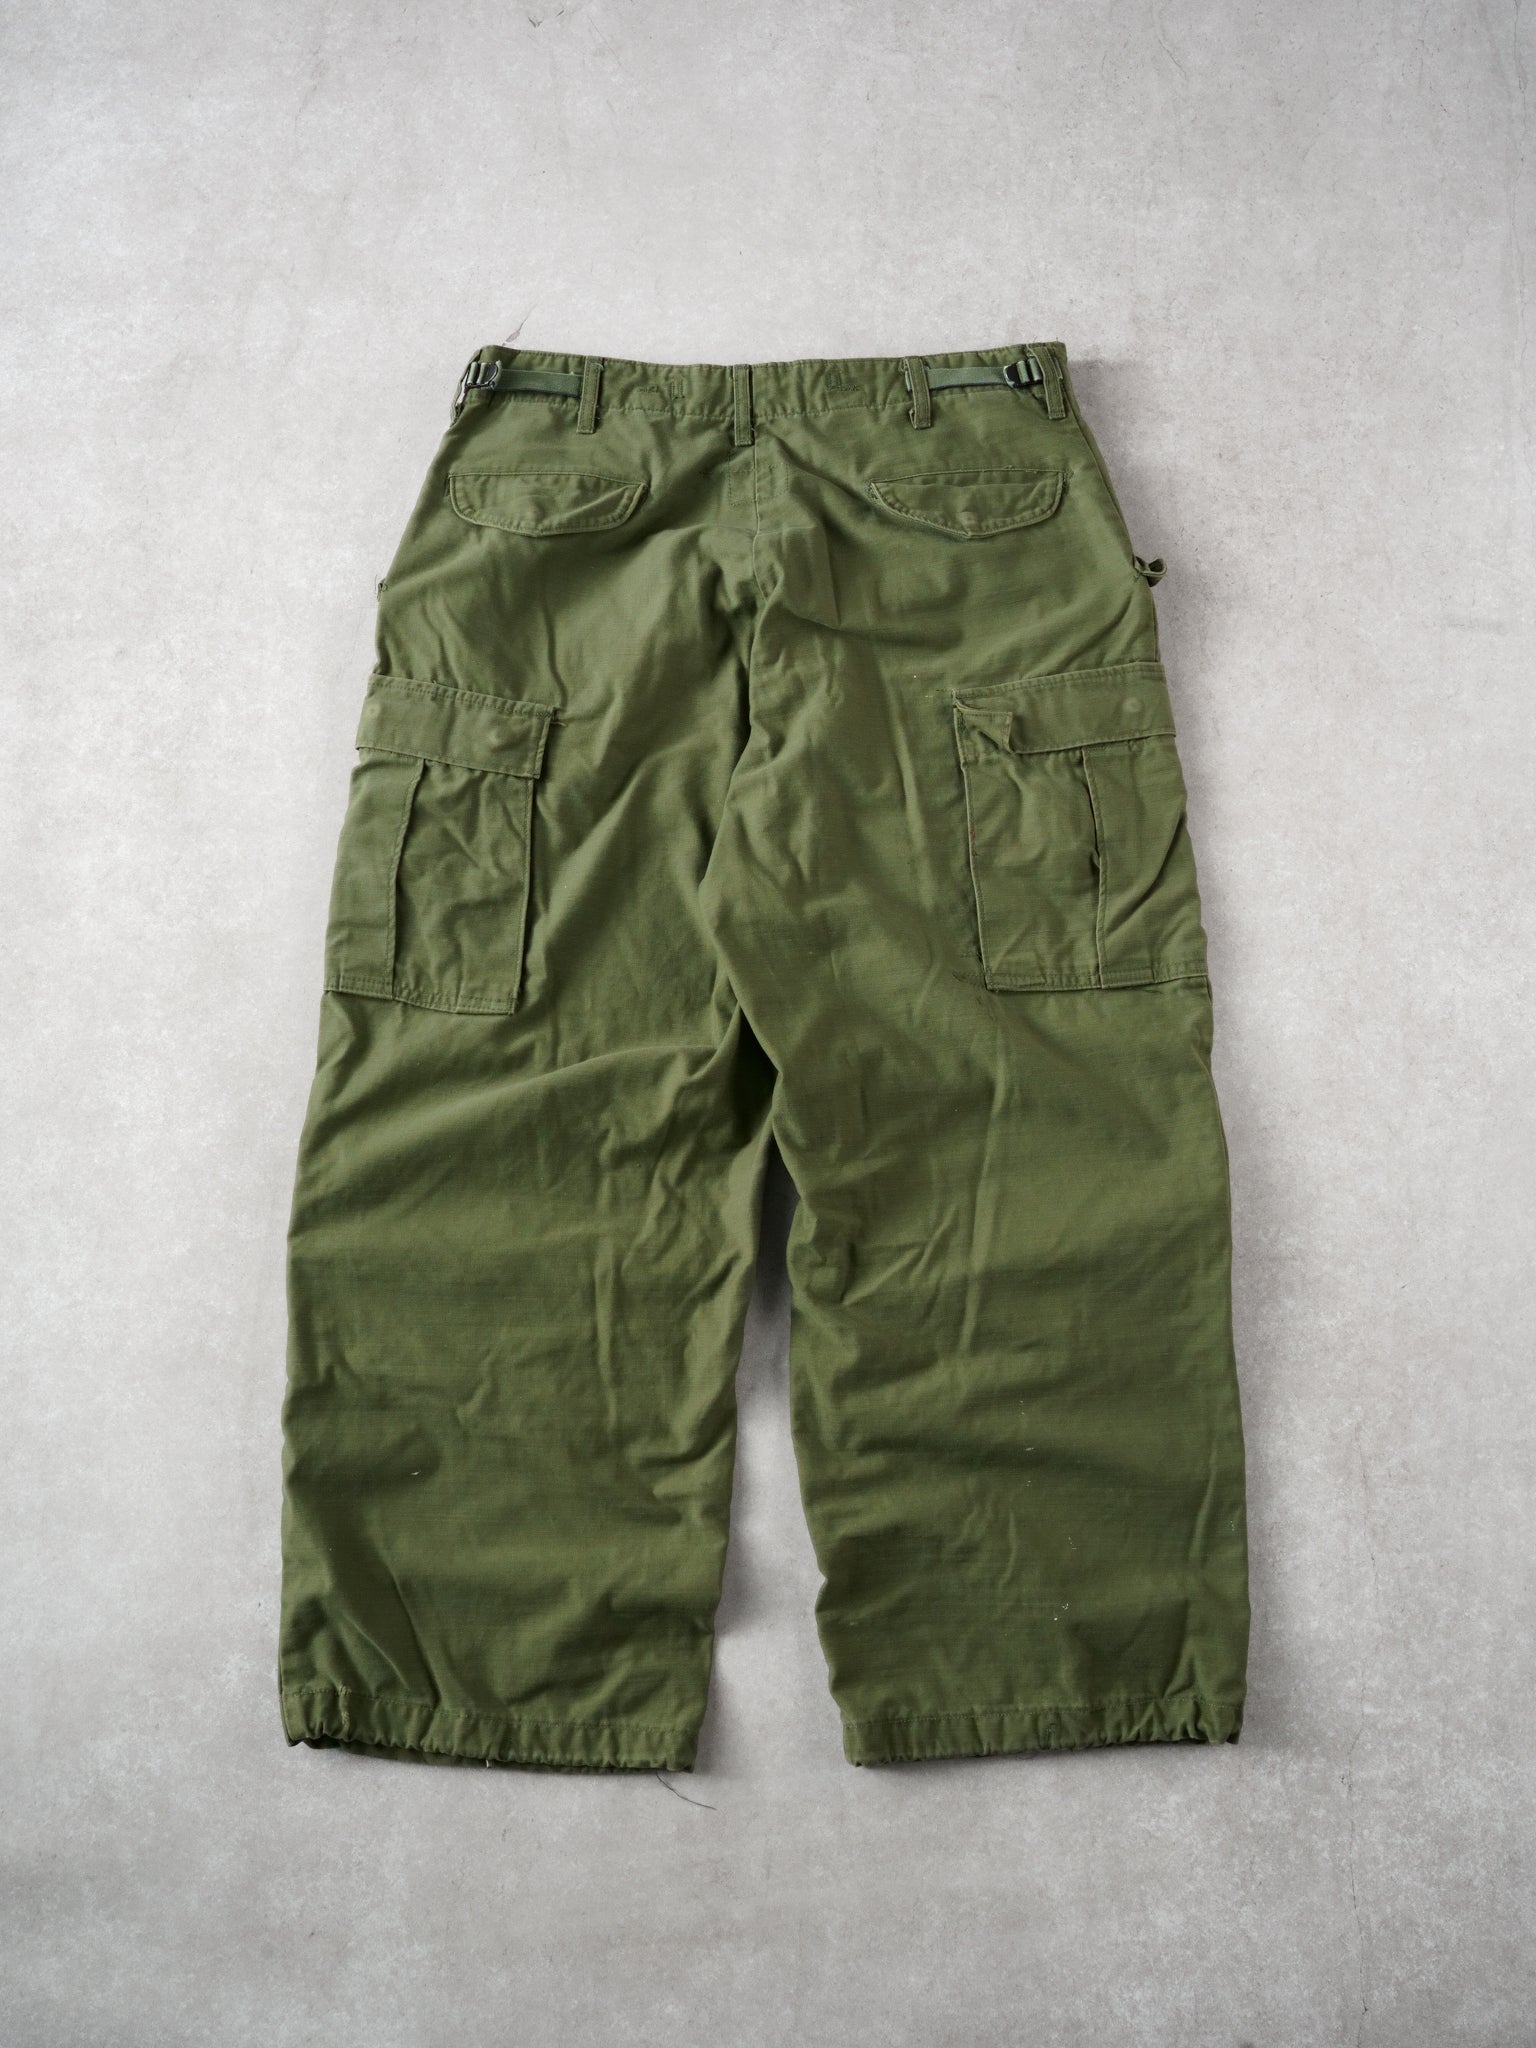 Vintage 90s Moss Green Army Parachute Pants (32x25)